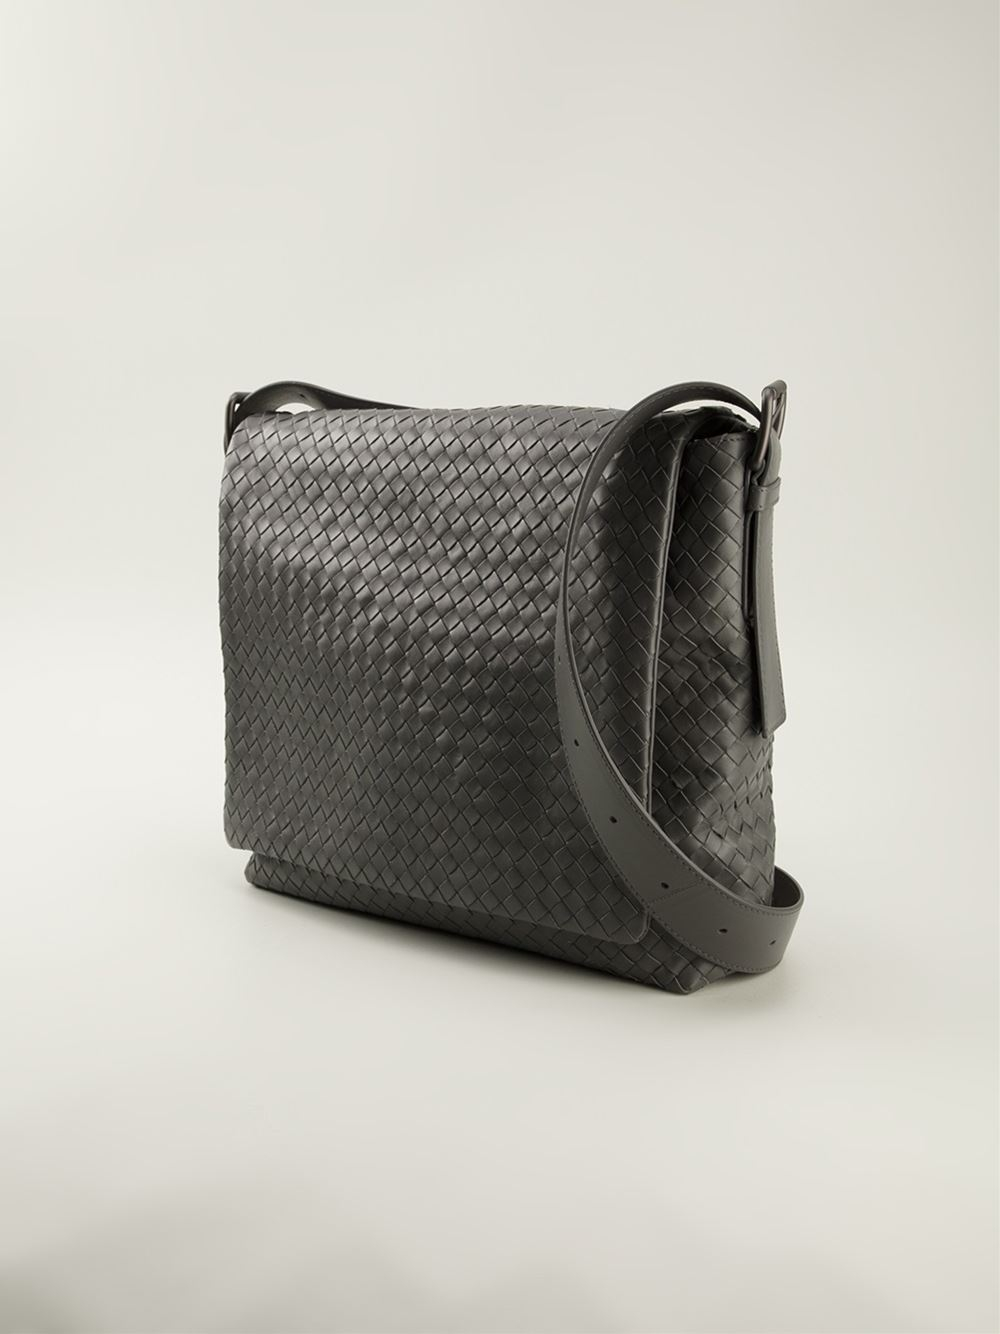 Lyst - Bottega Veneta Intrecciato Messenger Bag in Gray for Men